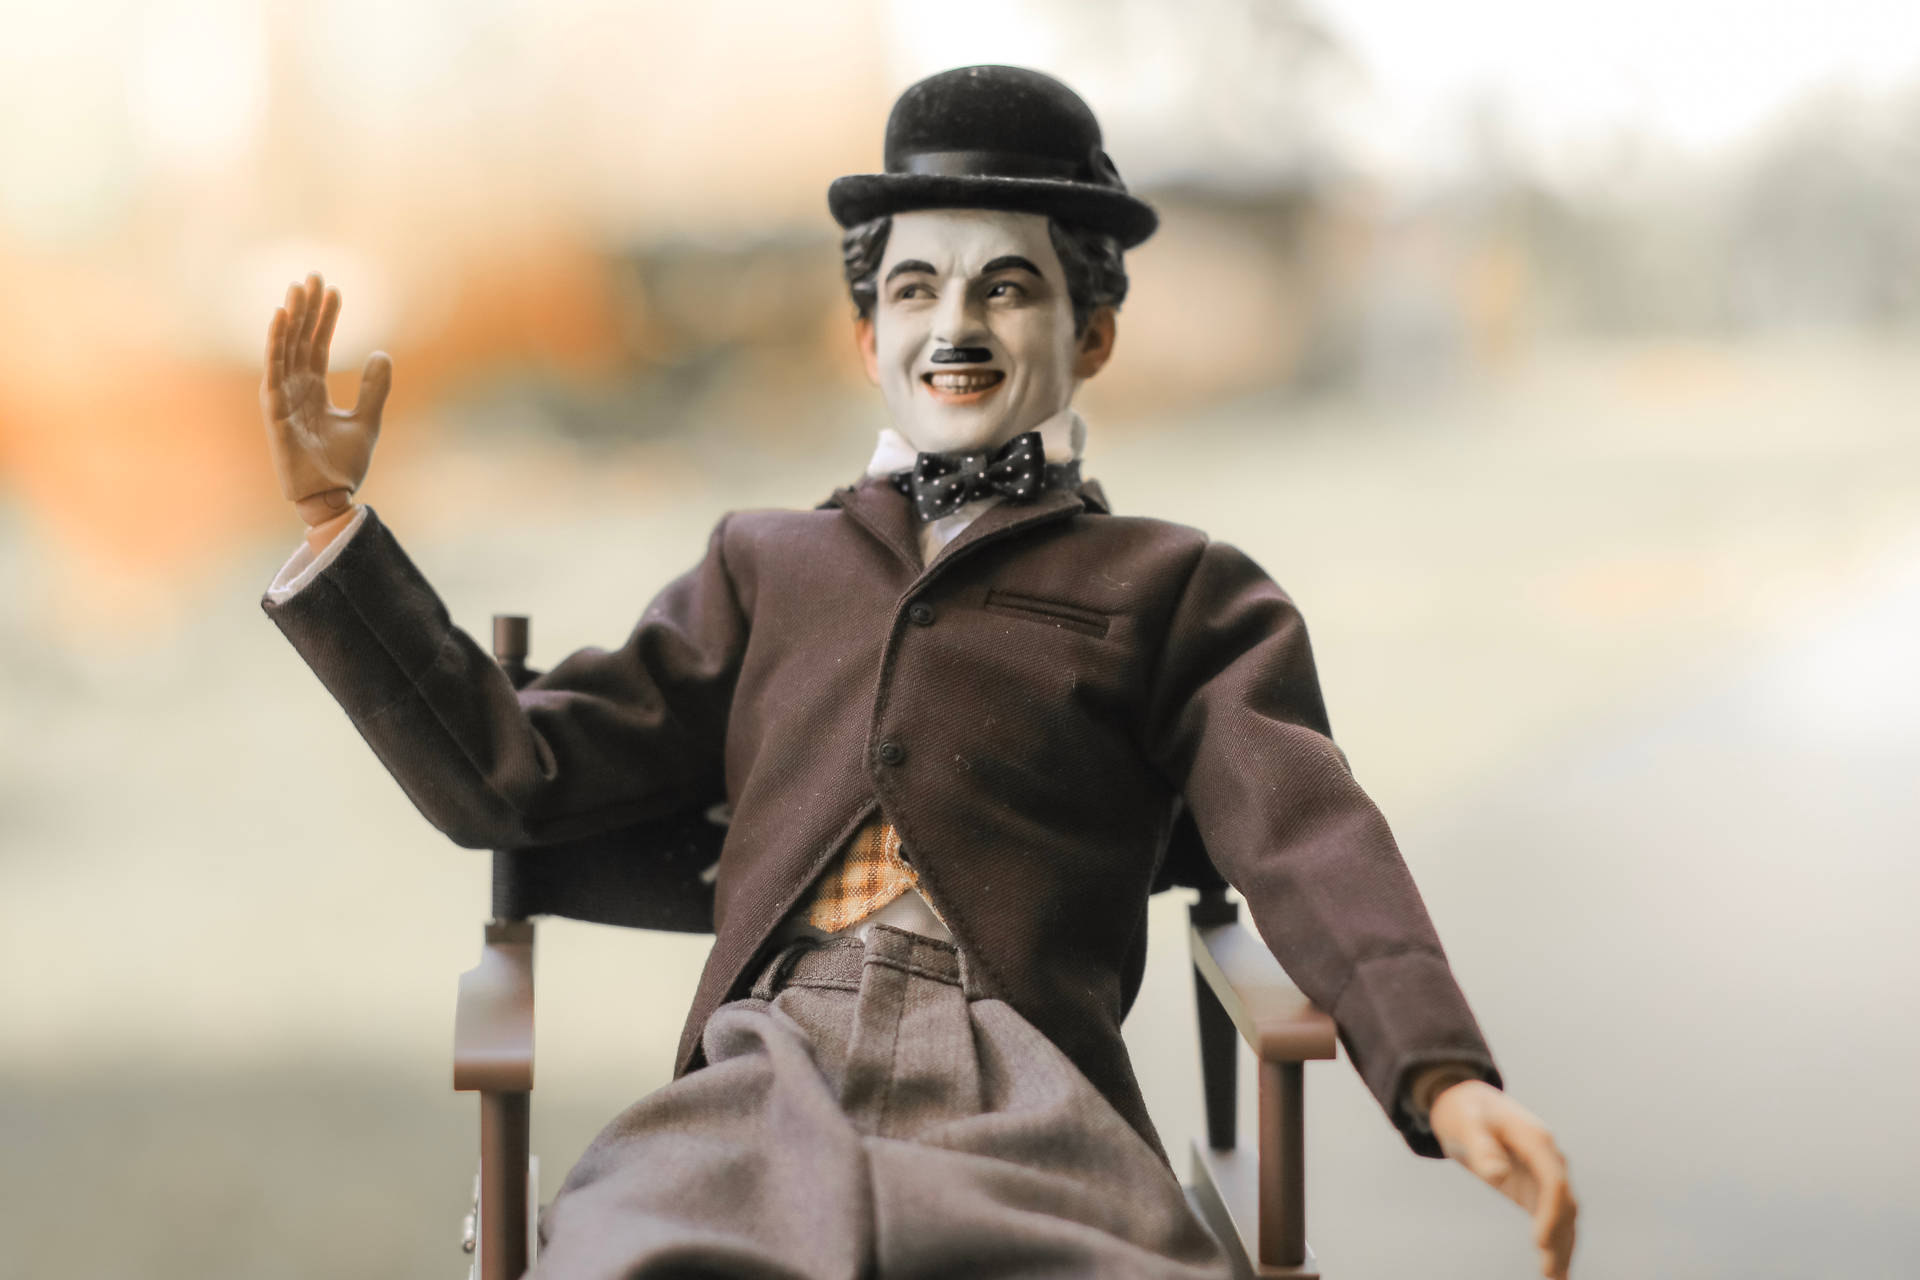 Colored Charlie Chaplin Figurine Background